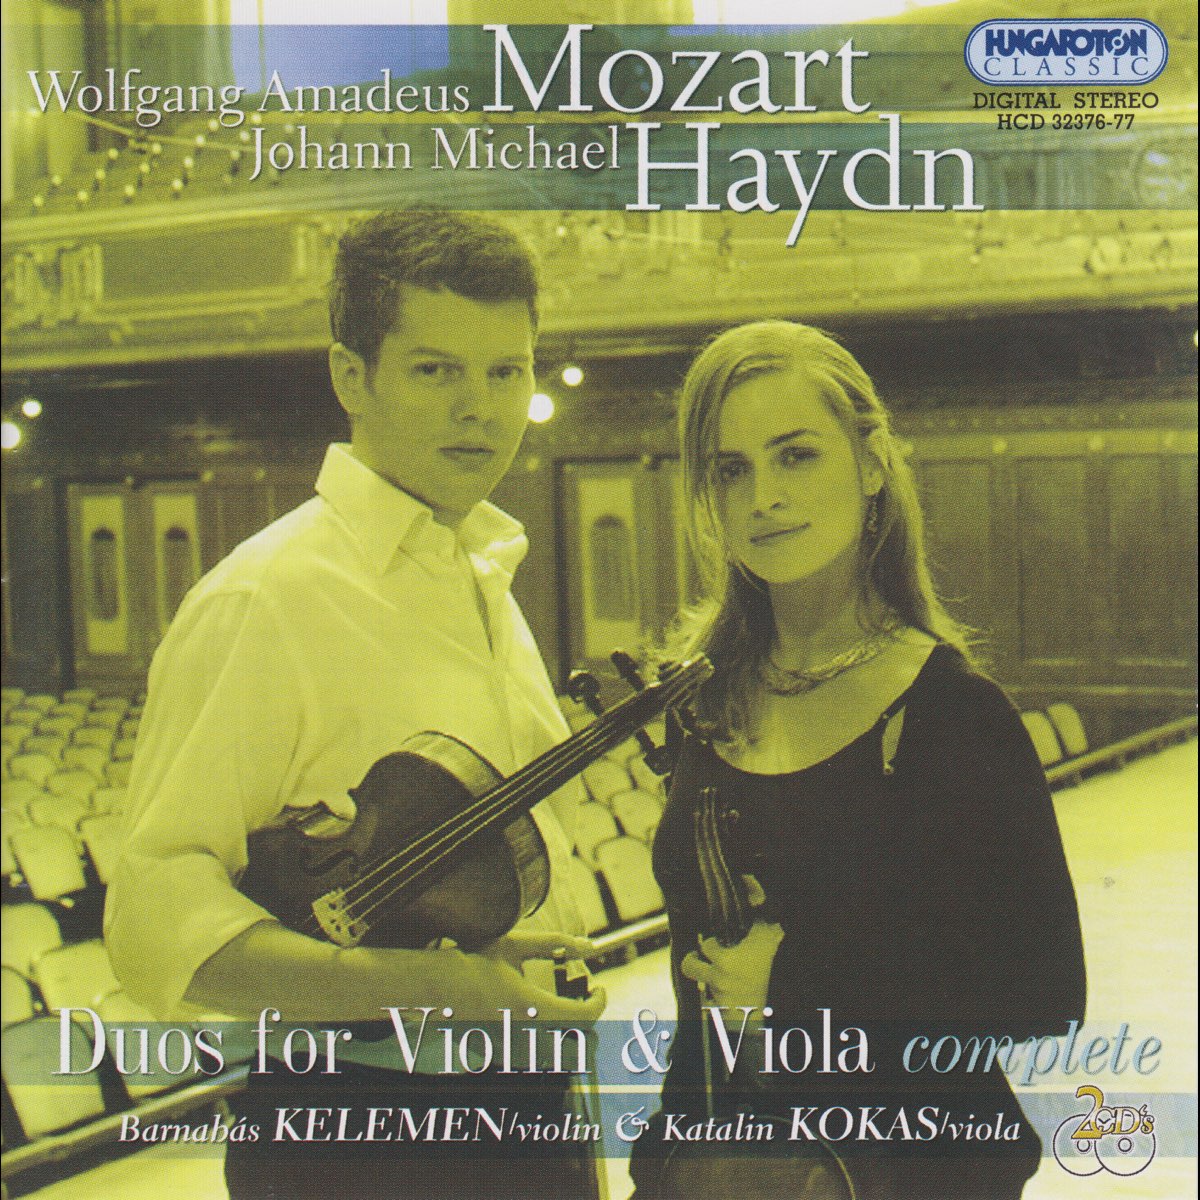 Duos for Violin and Viola by Barnabás Kelemen & Katalin Kokas on Apple Music